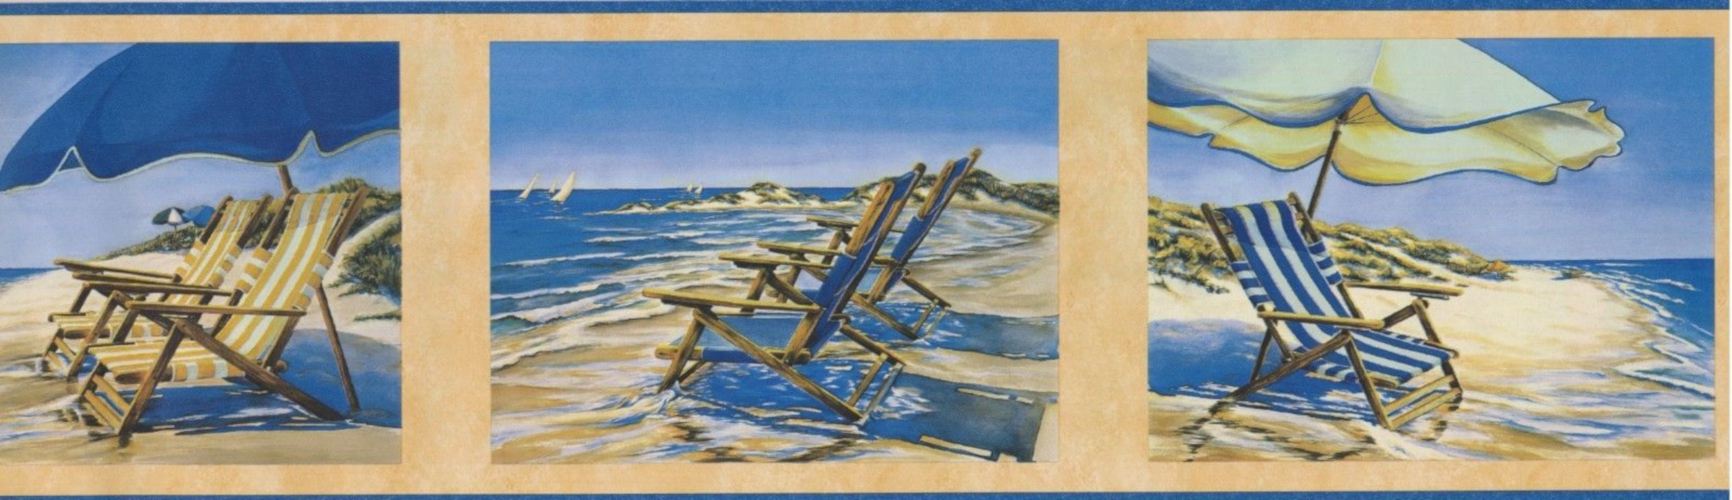 Folding Beach Chairs Ocean Scene Wallpaper Border Imperial